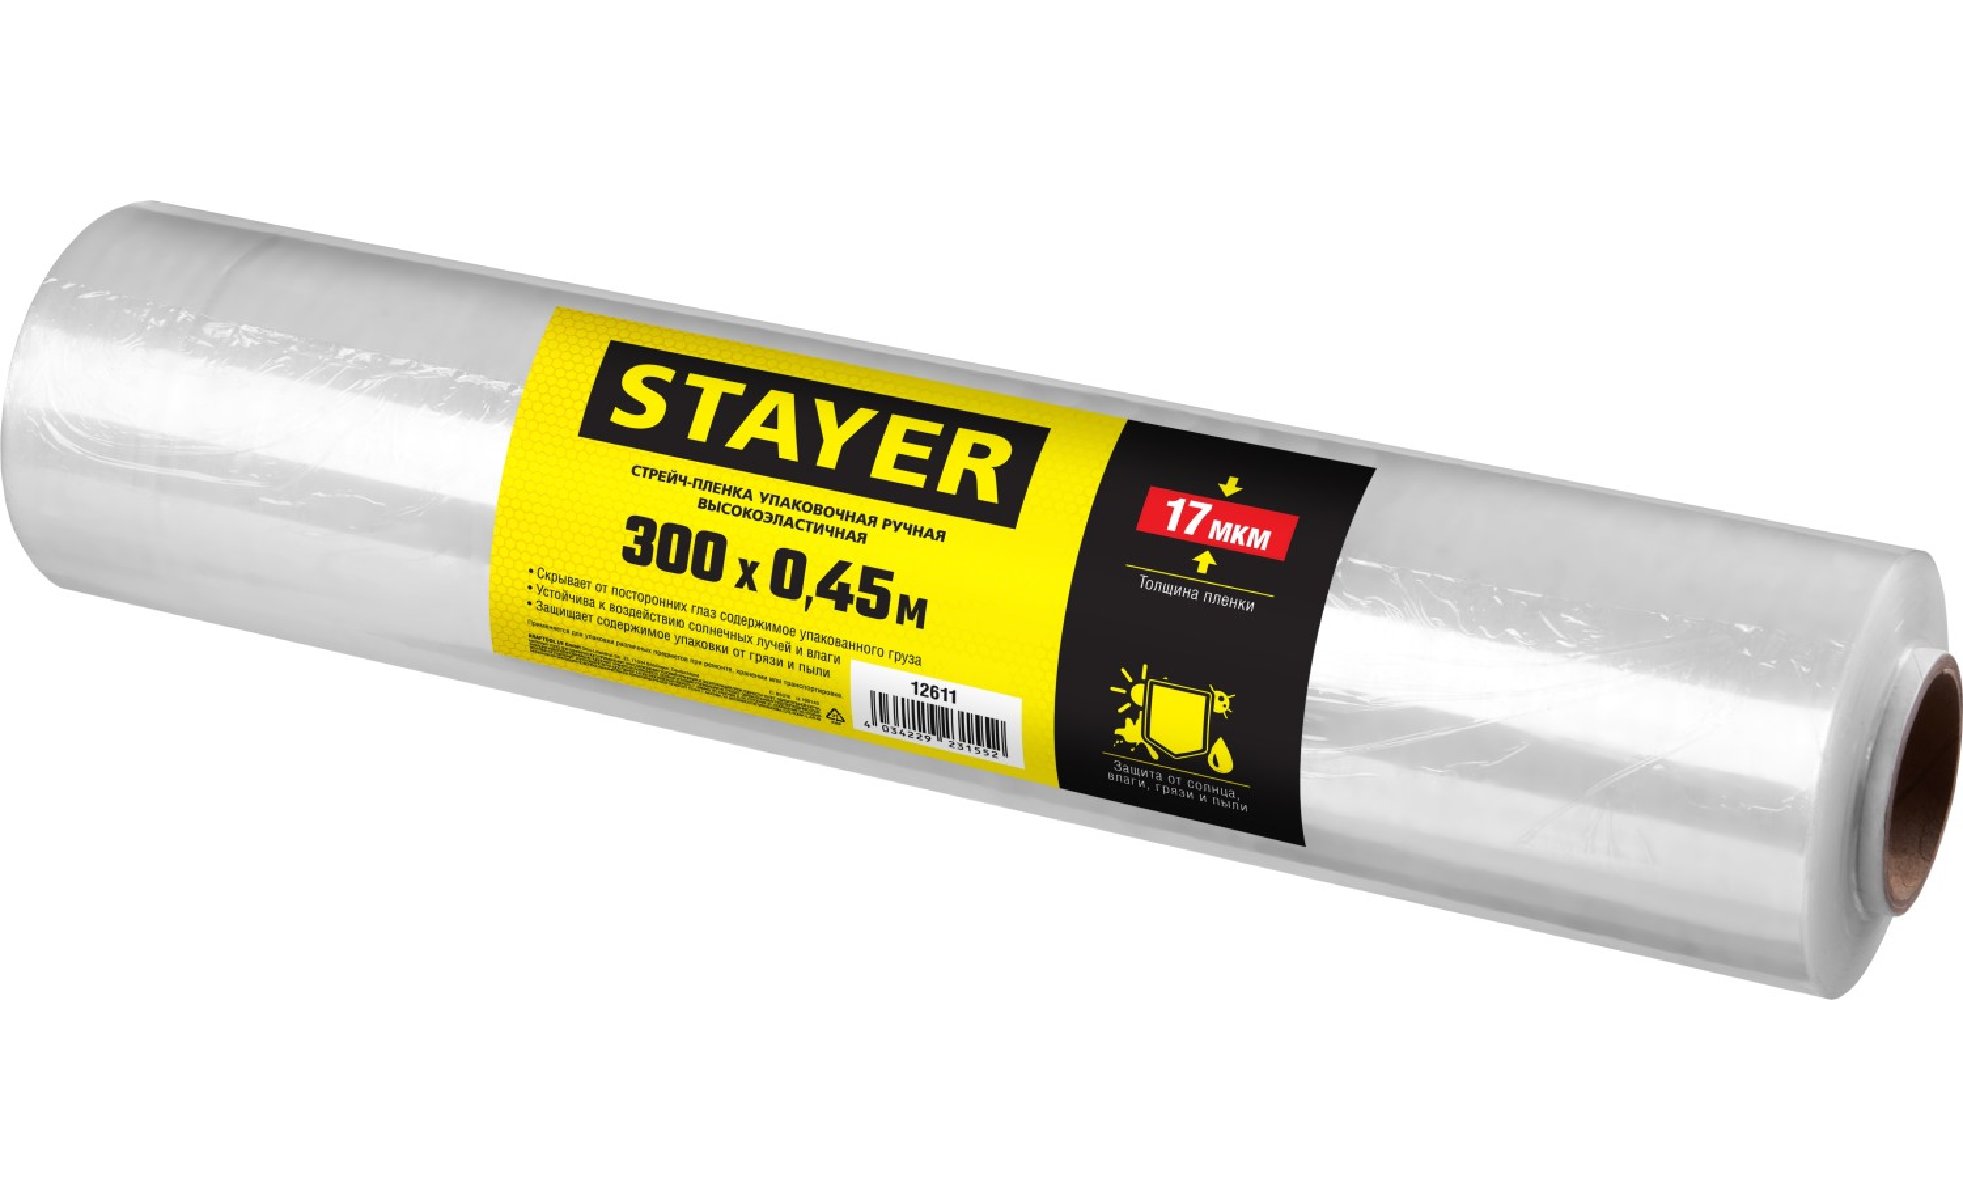 Упаковочная cтрейч-пленка STAYER 300м х 450мм толщина 17 мкм УФ стойкая высокоэластичная (12611)